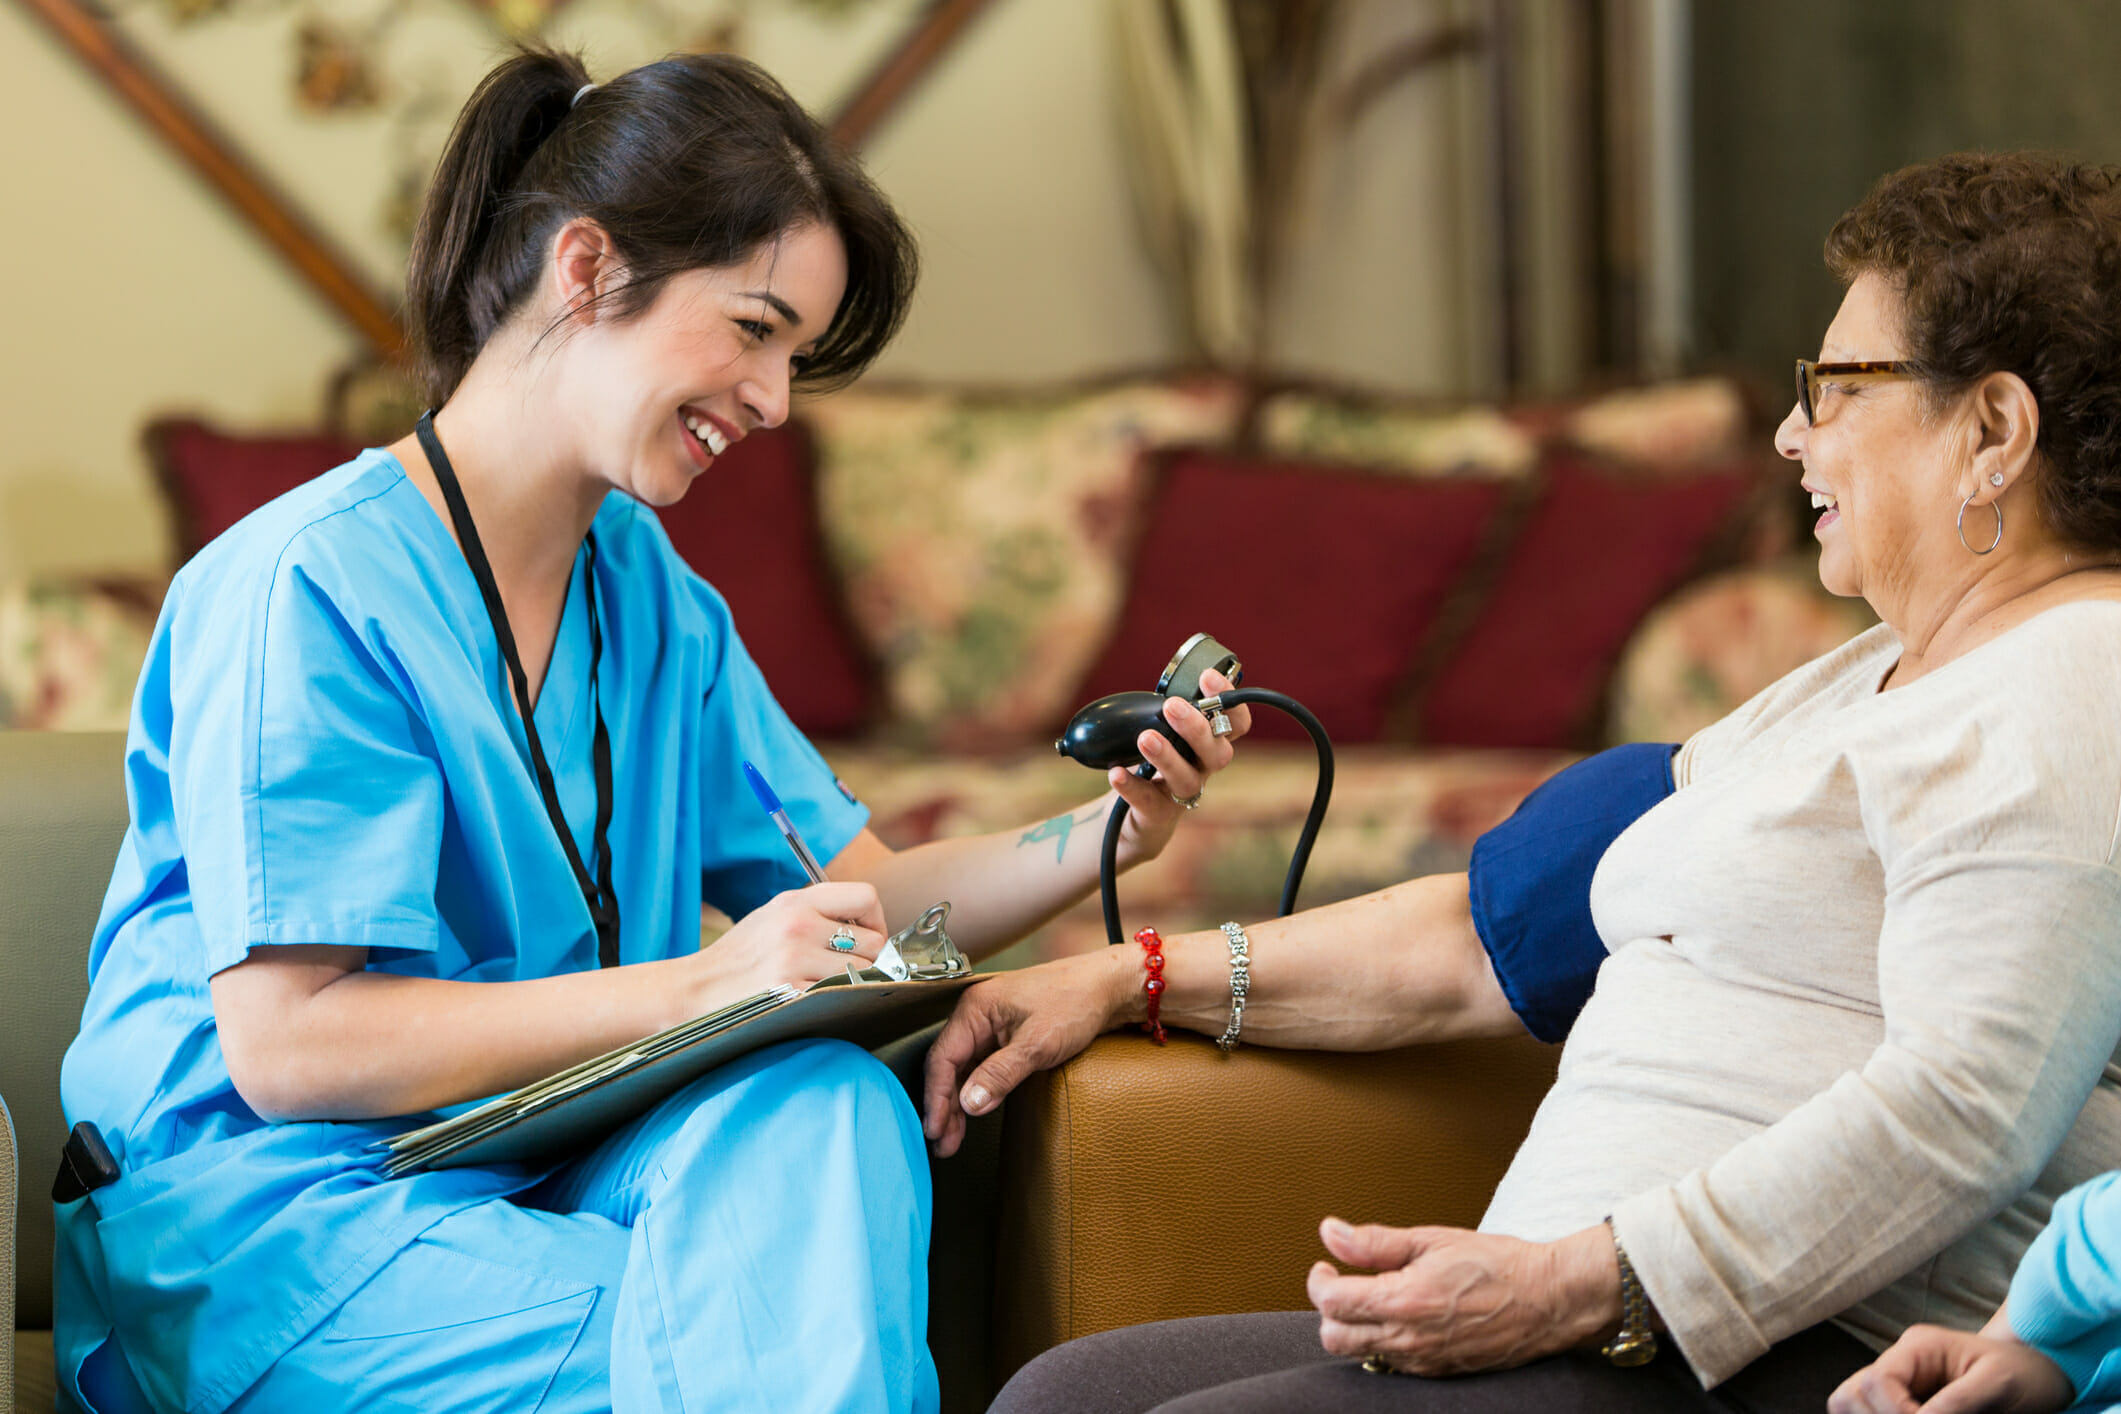 Home healthcare nurse checks patient's blood pressure